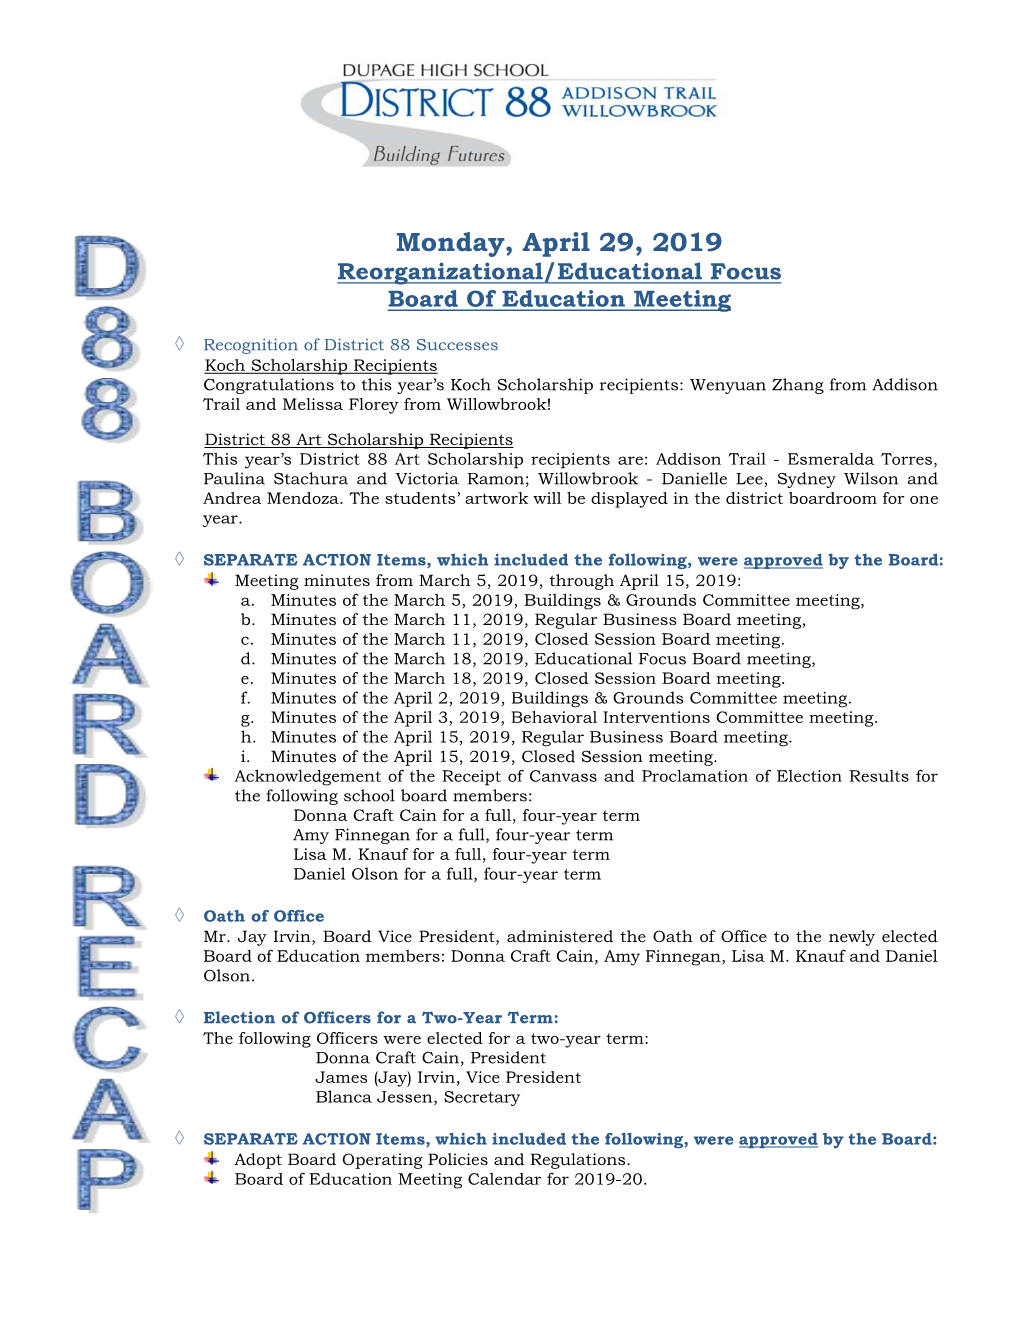 Monday, April 29, 2019 Reorganizational/Educational Focus Board of Education Meeting